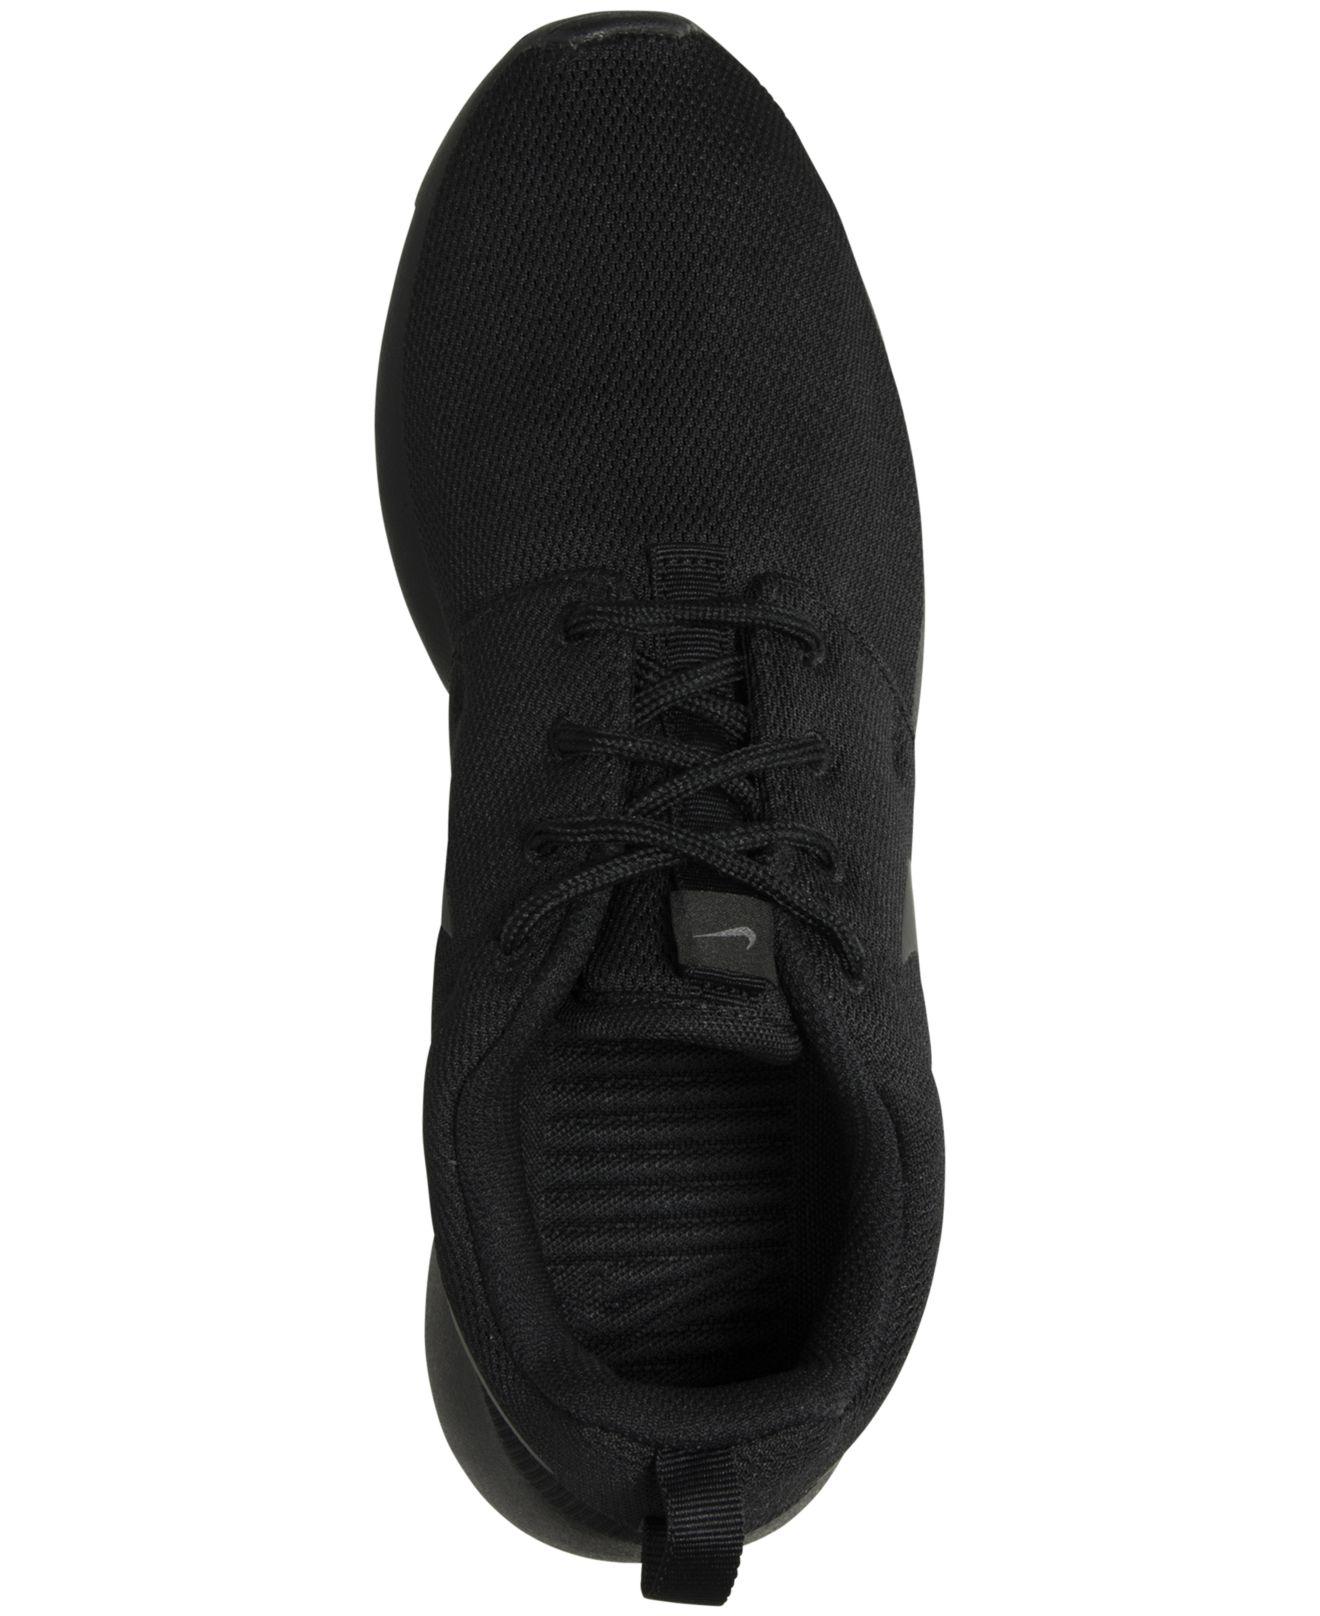 Nike Rubber Roshe One Sneakers in Black,Dark Grey,Black (Black) - Save 68%  - Lyst